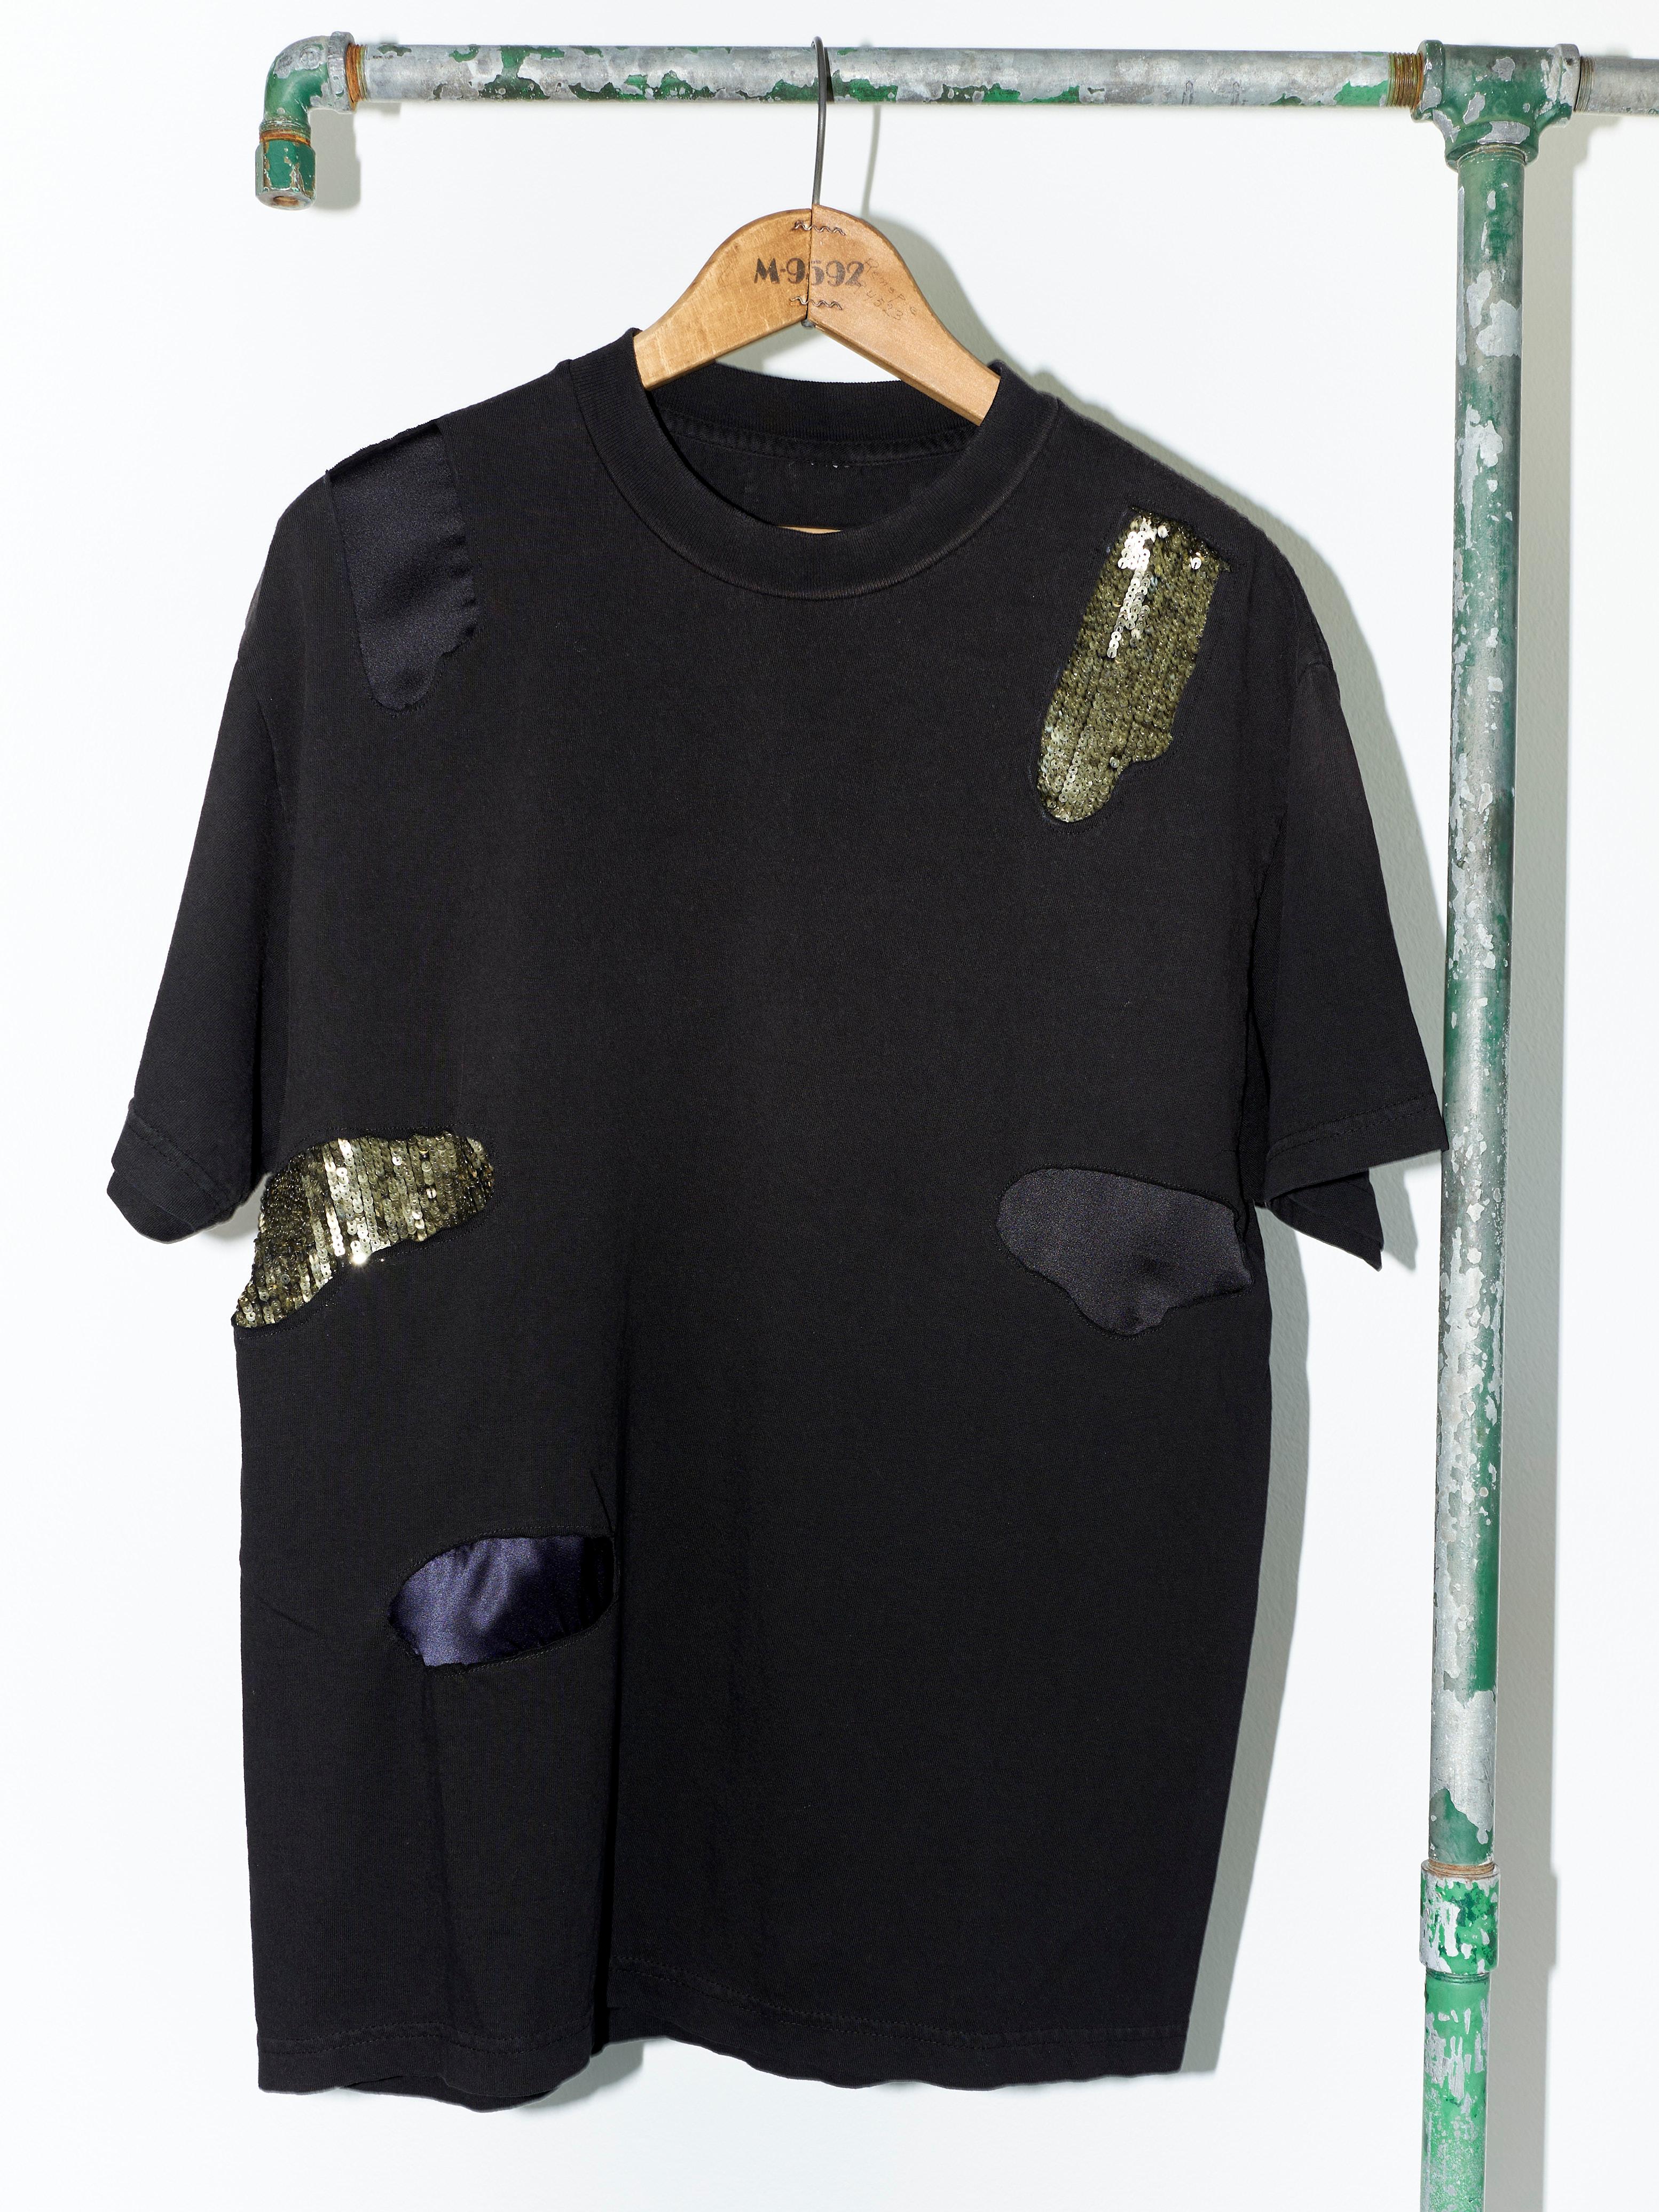 J Dauphin Black T-Shirt Embellished  Patch Work Sequin Silk Body Cotton  4